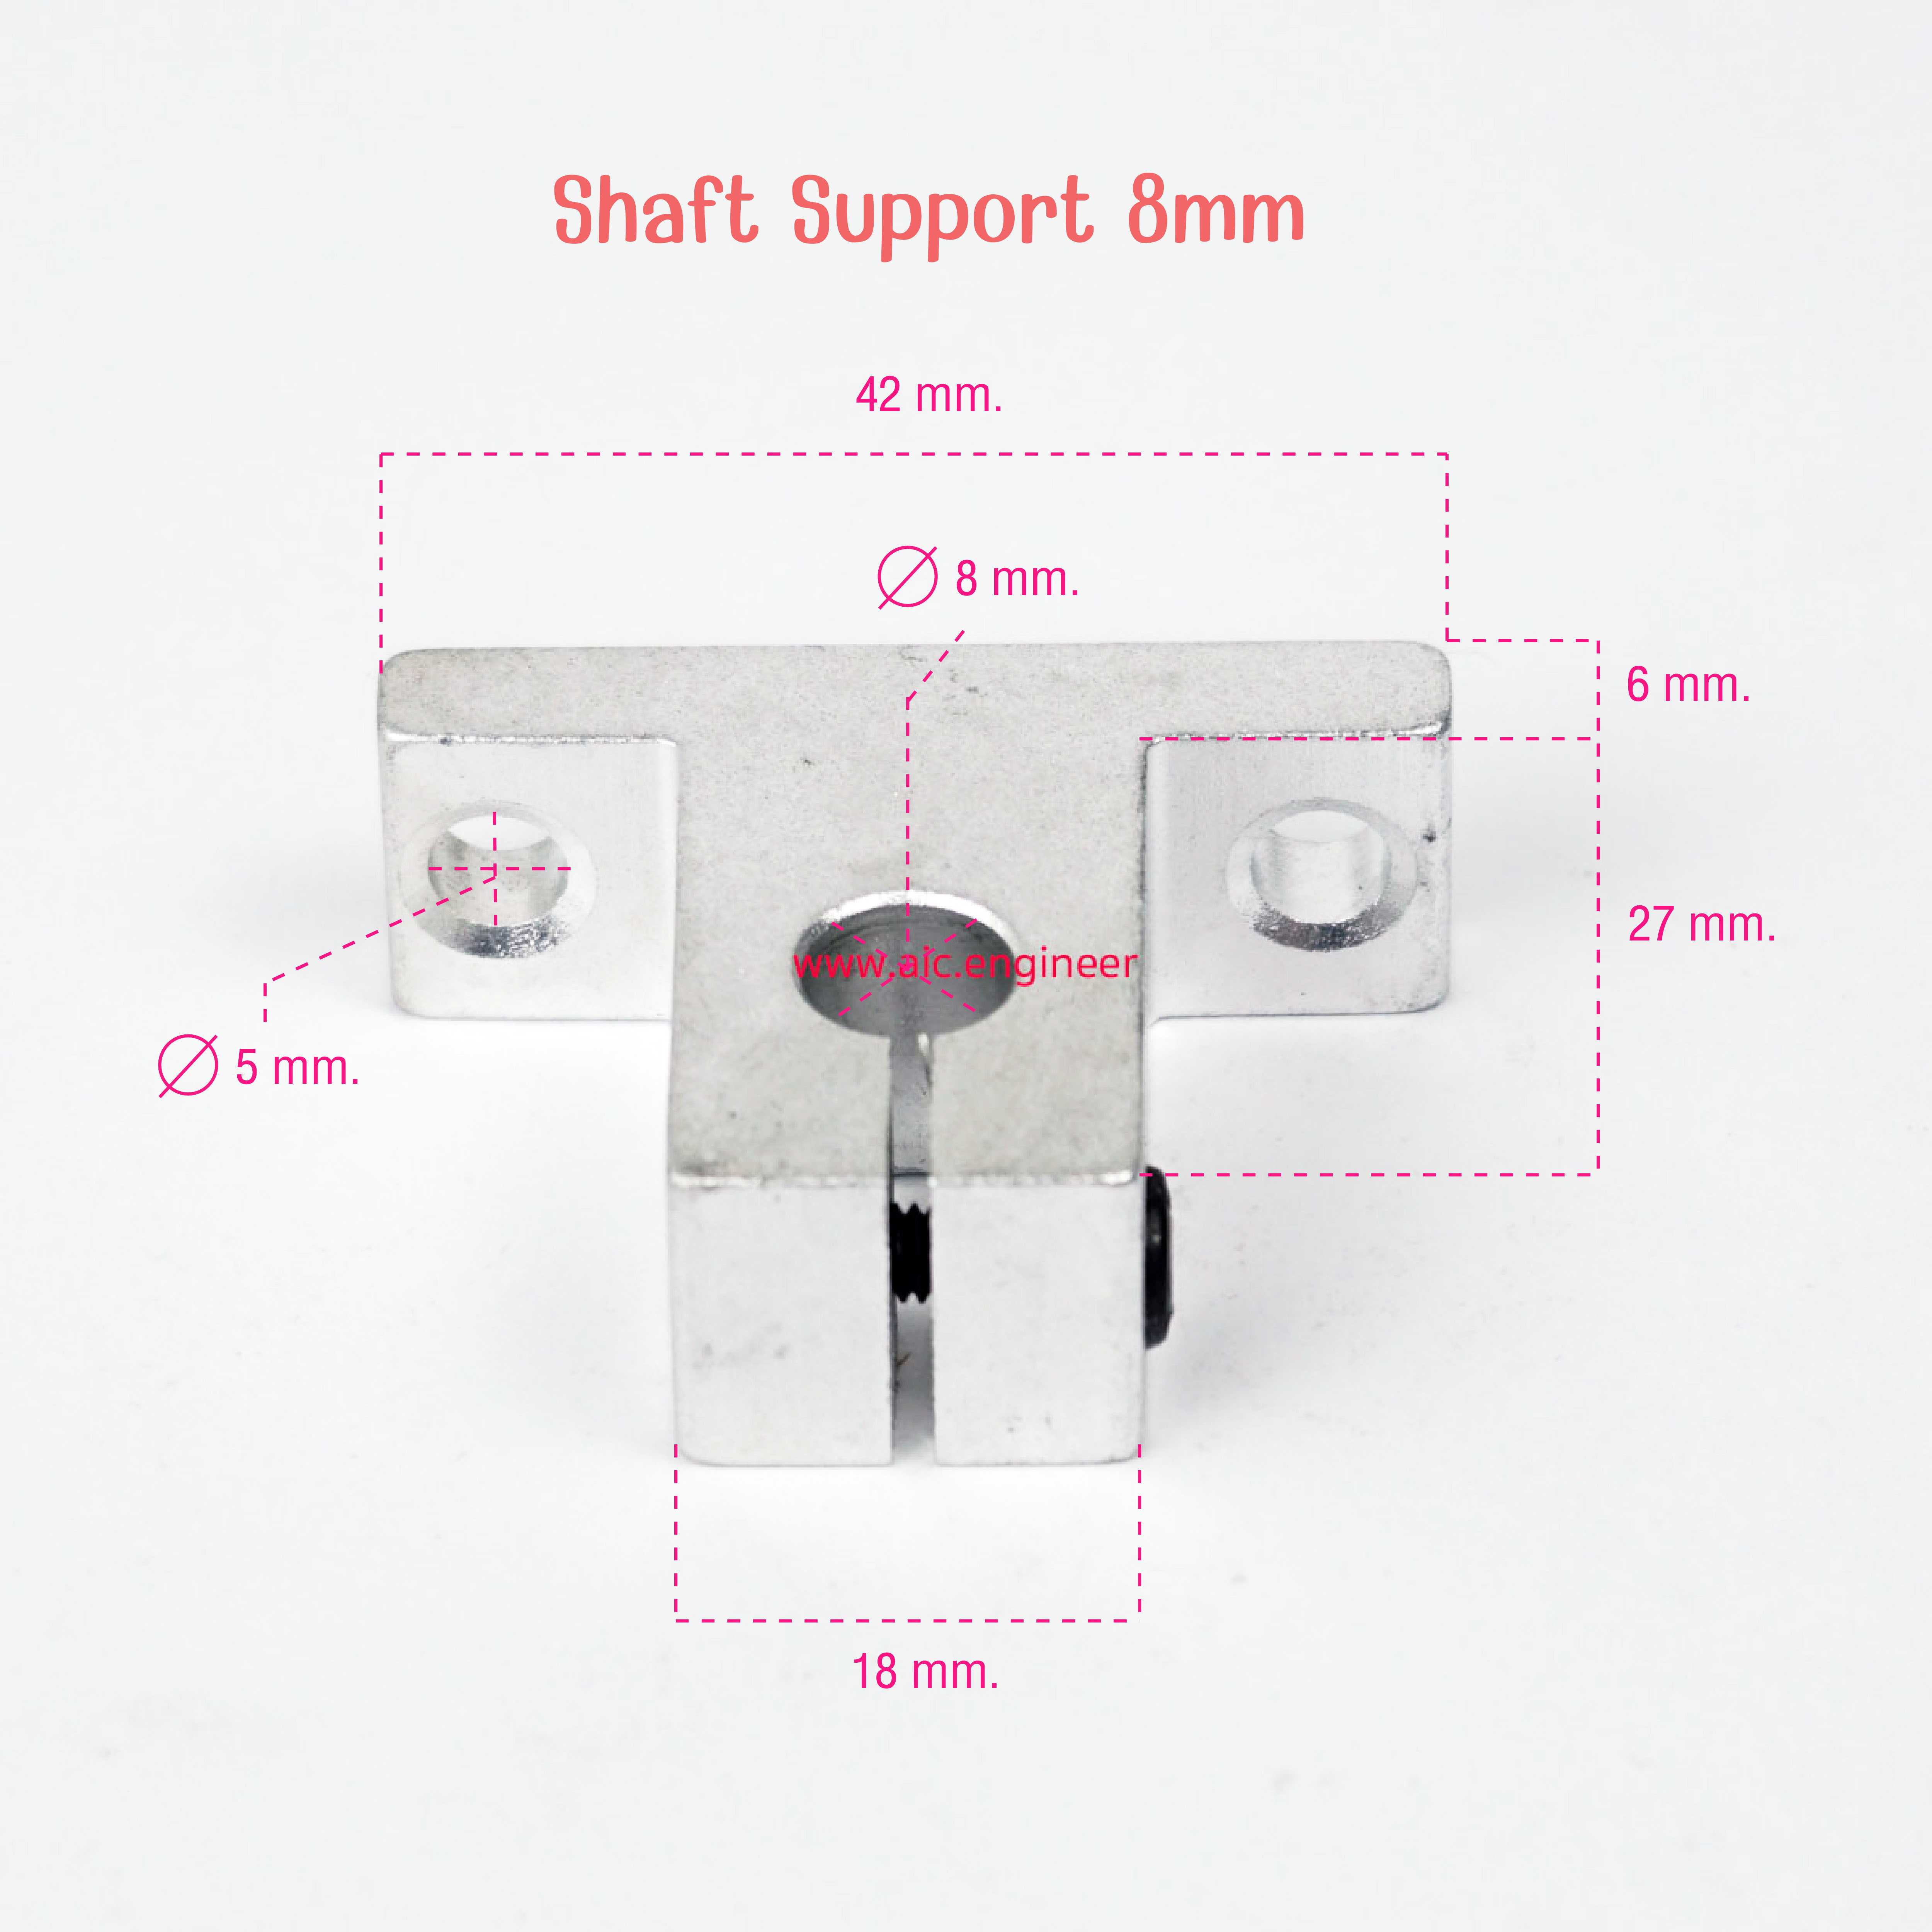 Shaft Support 8mm